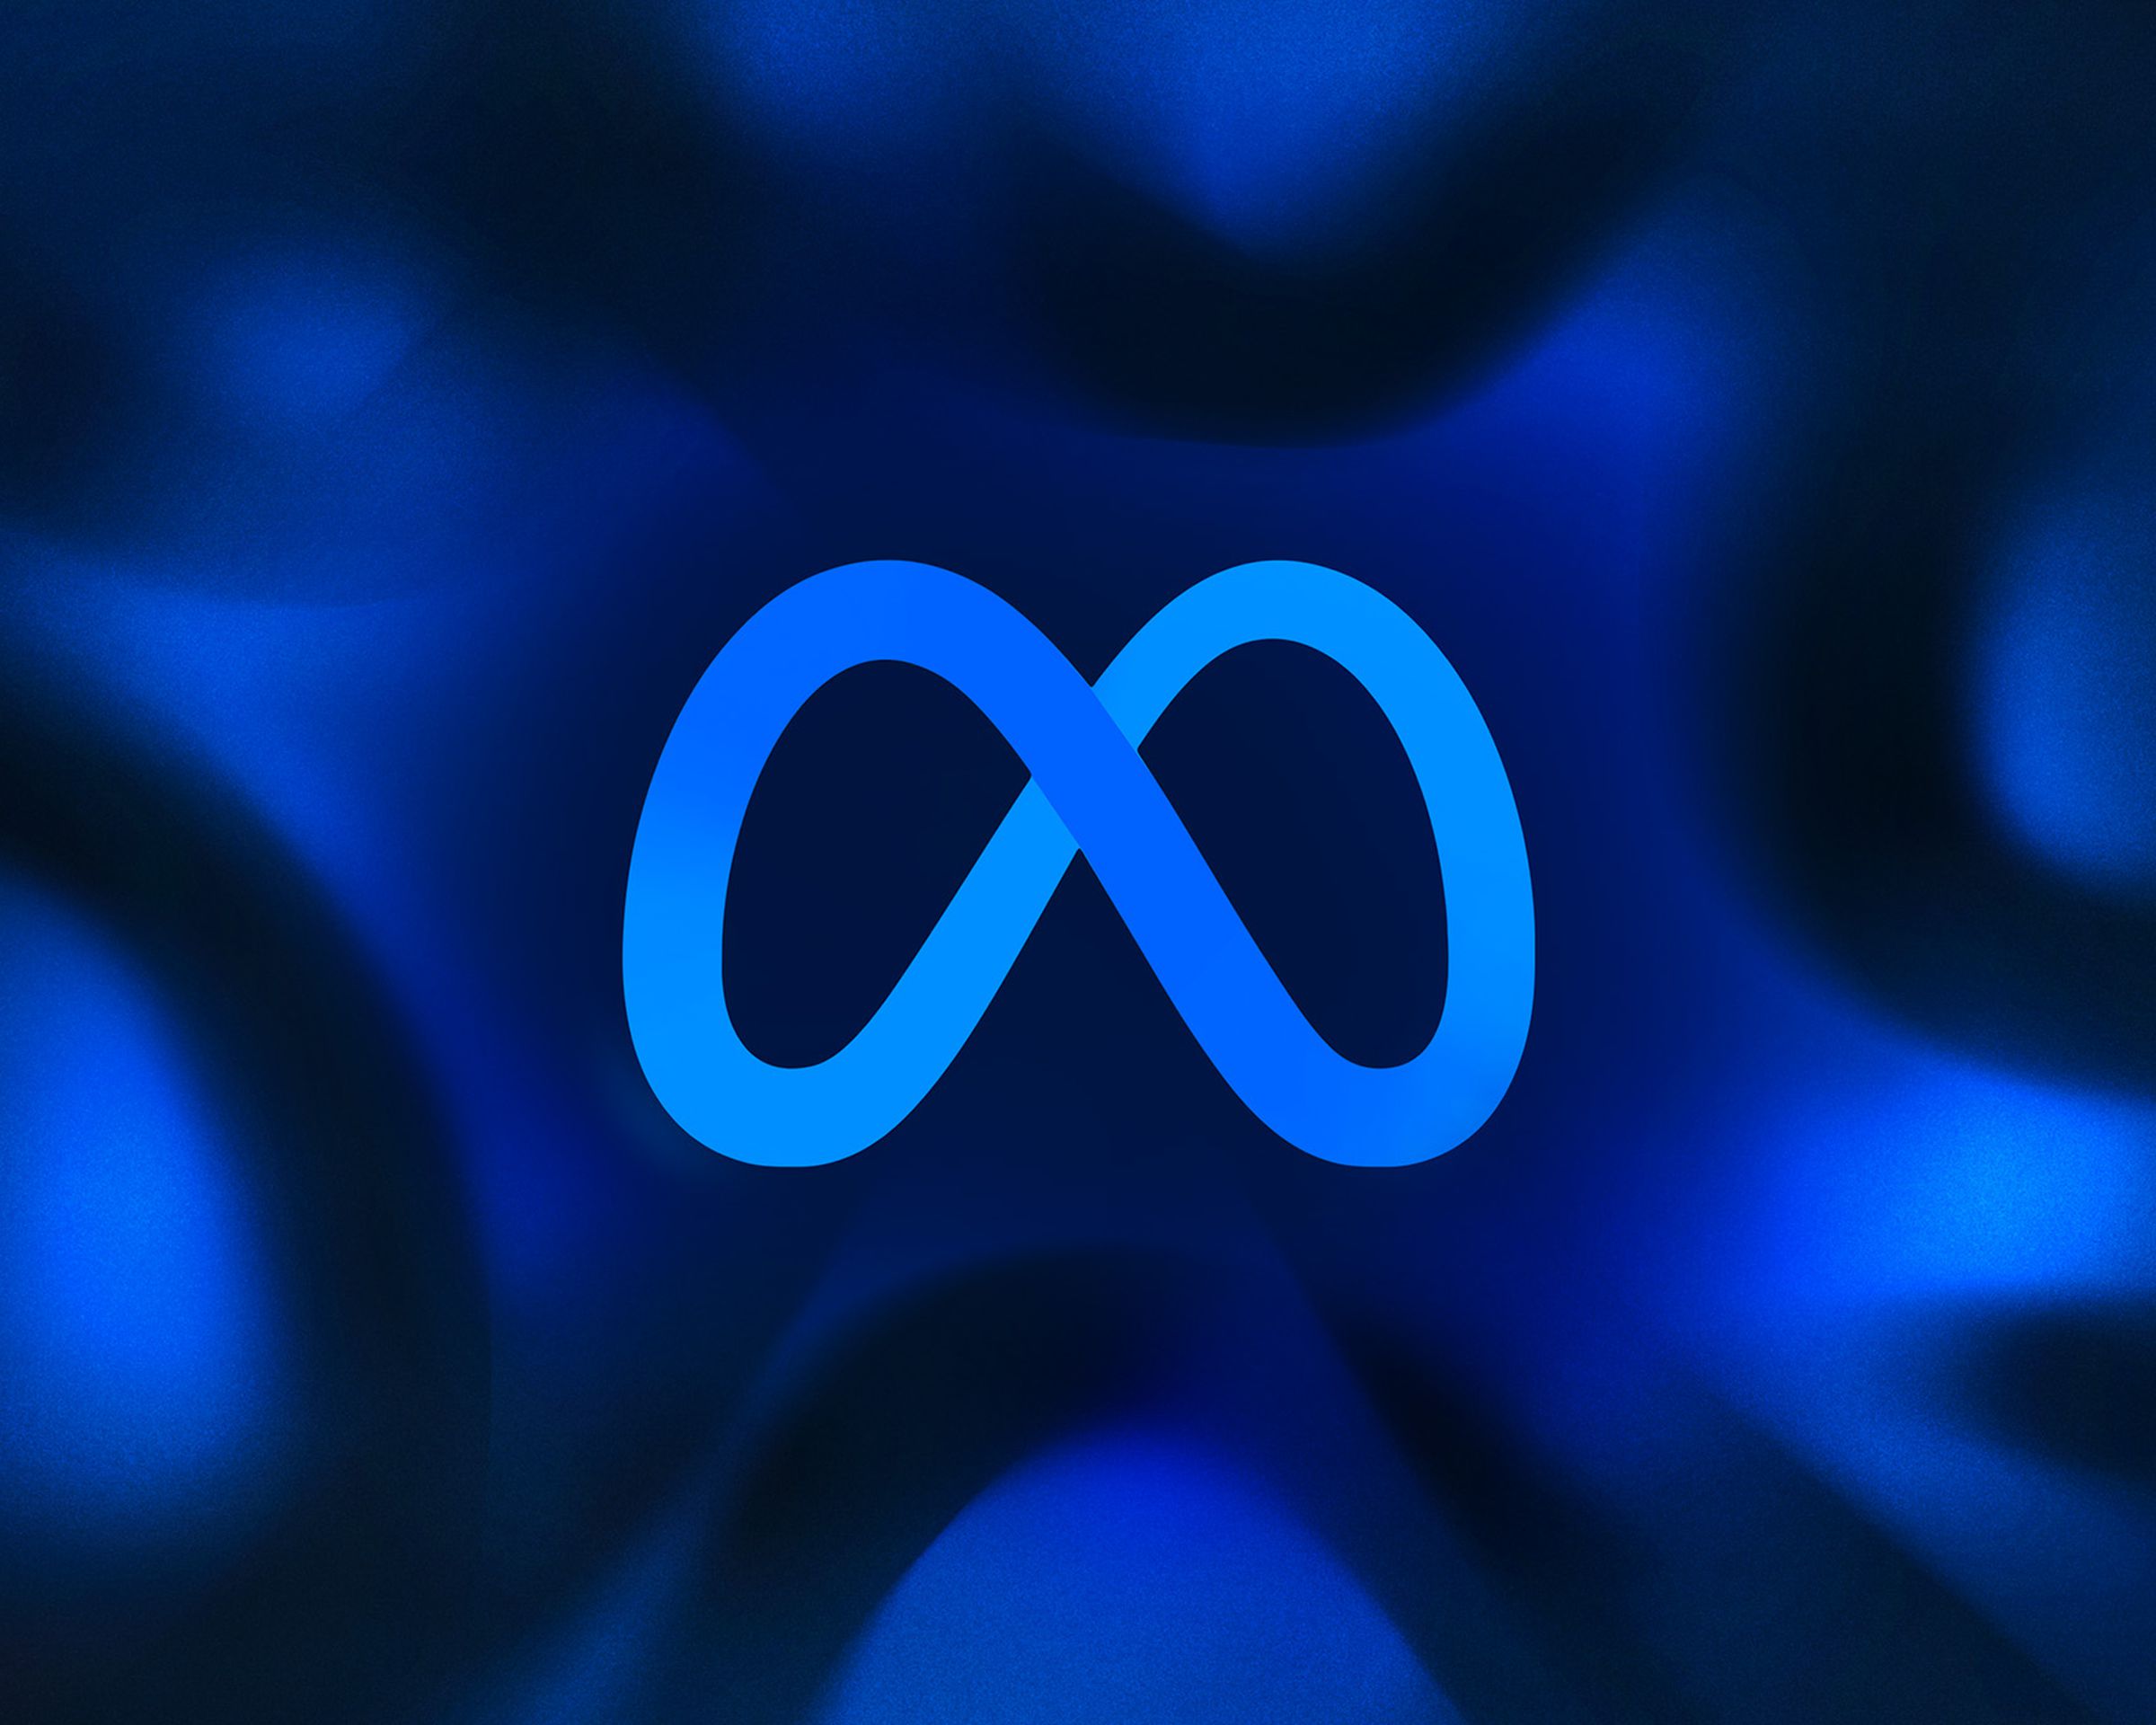 An image of the Meta logo.